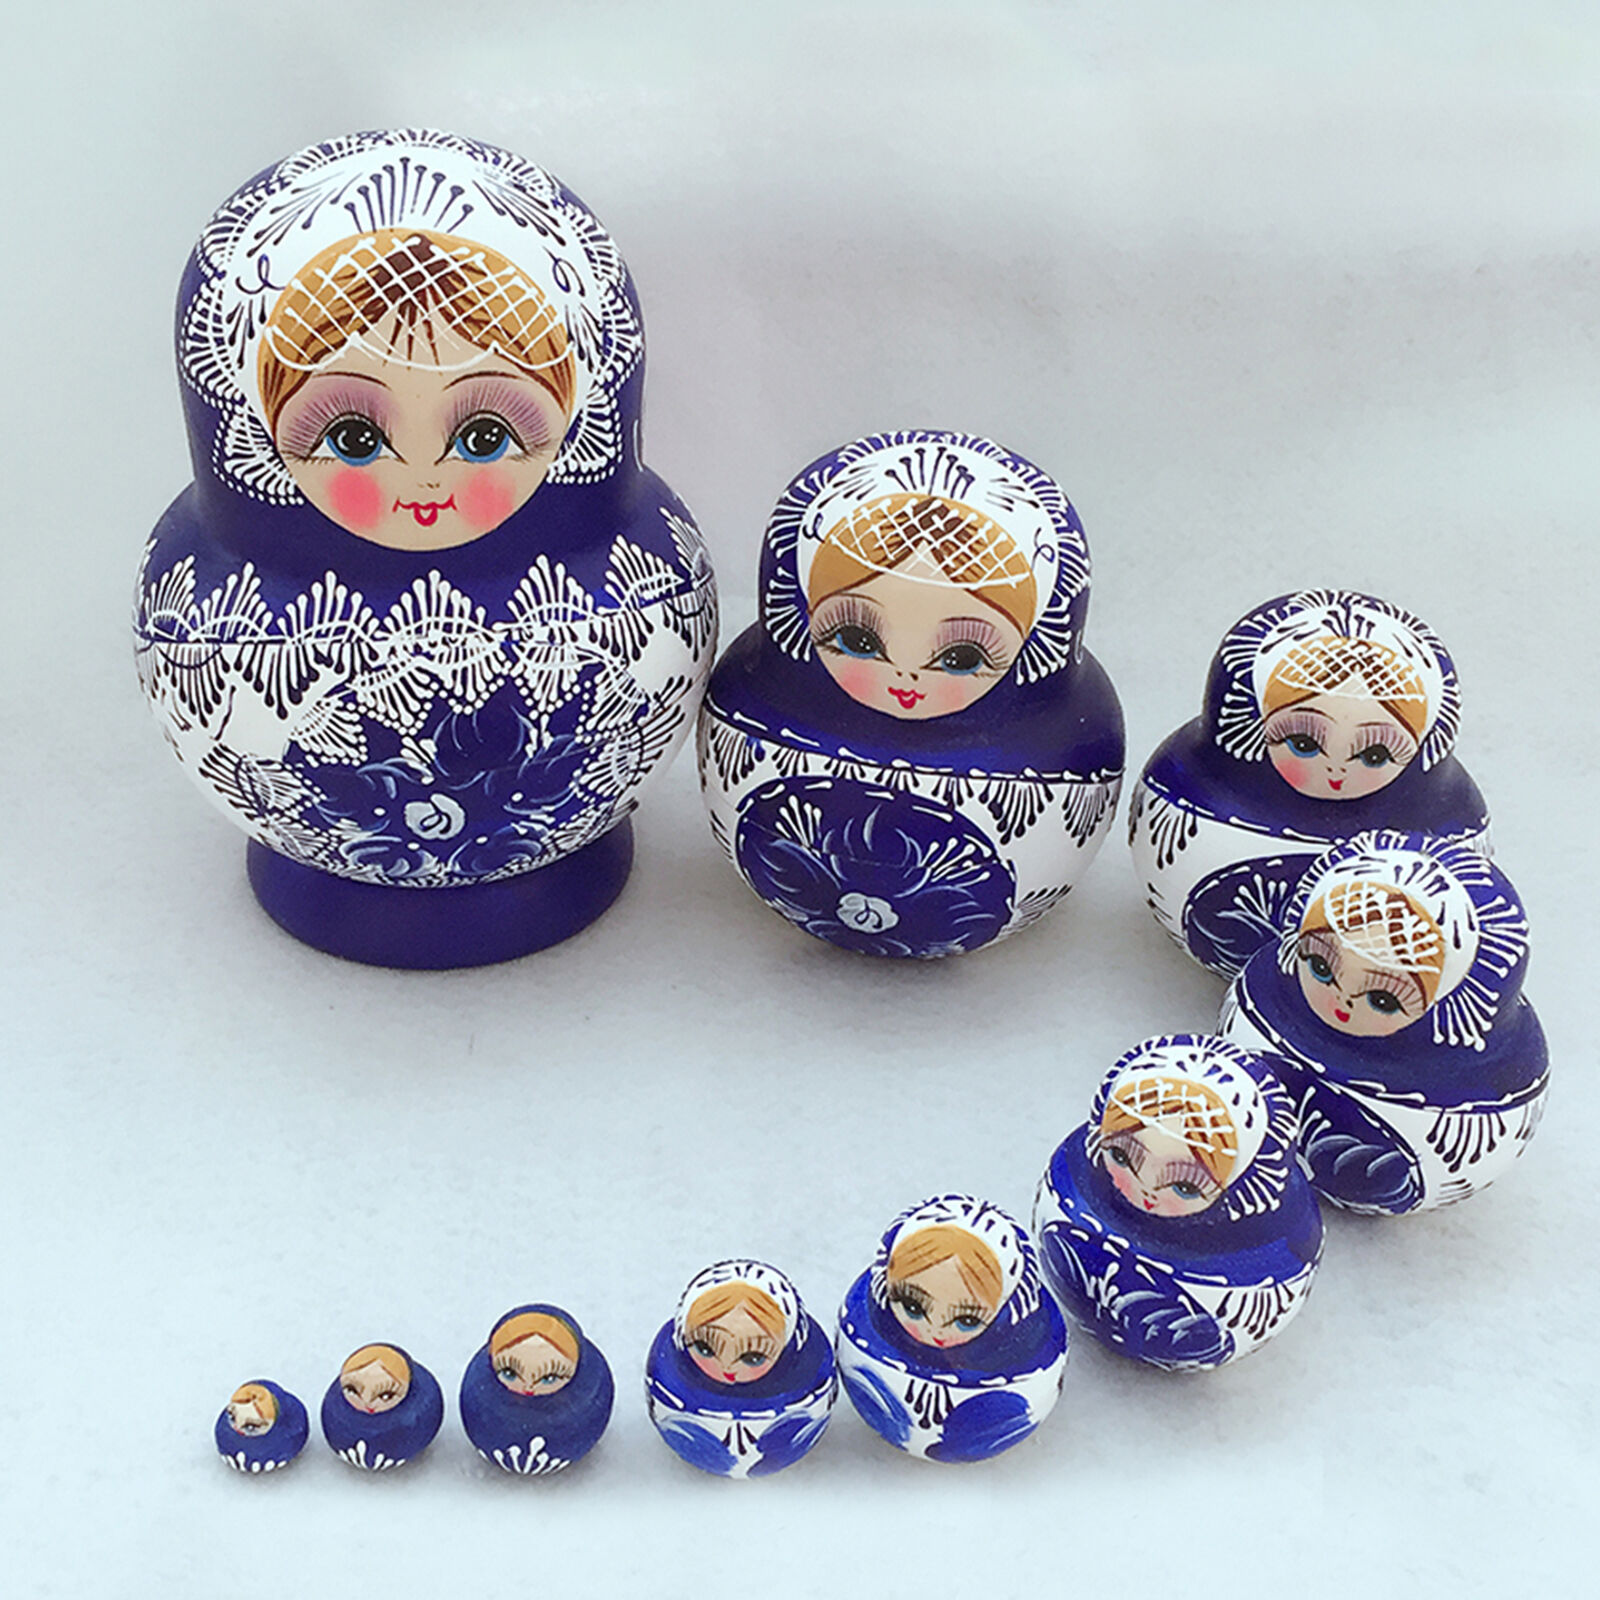 10Pcs/Set Russian Nesting Dolls Matryoshka Wooden Handmade Toy Craft Decor ao